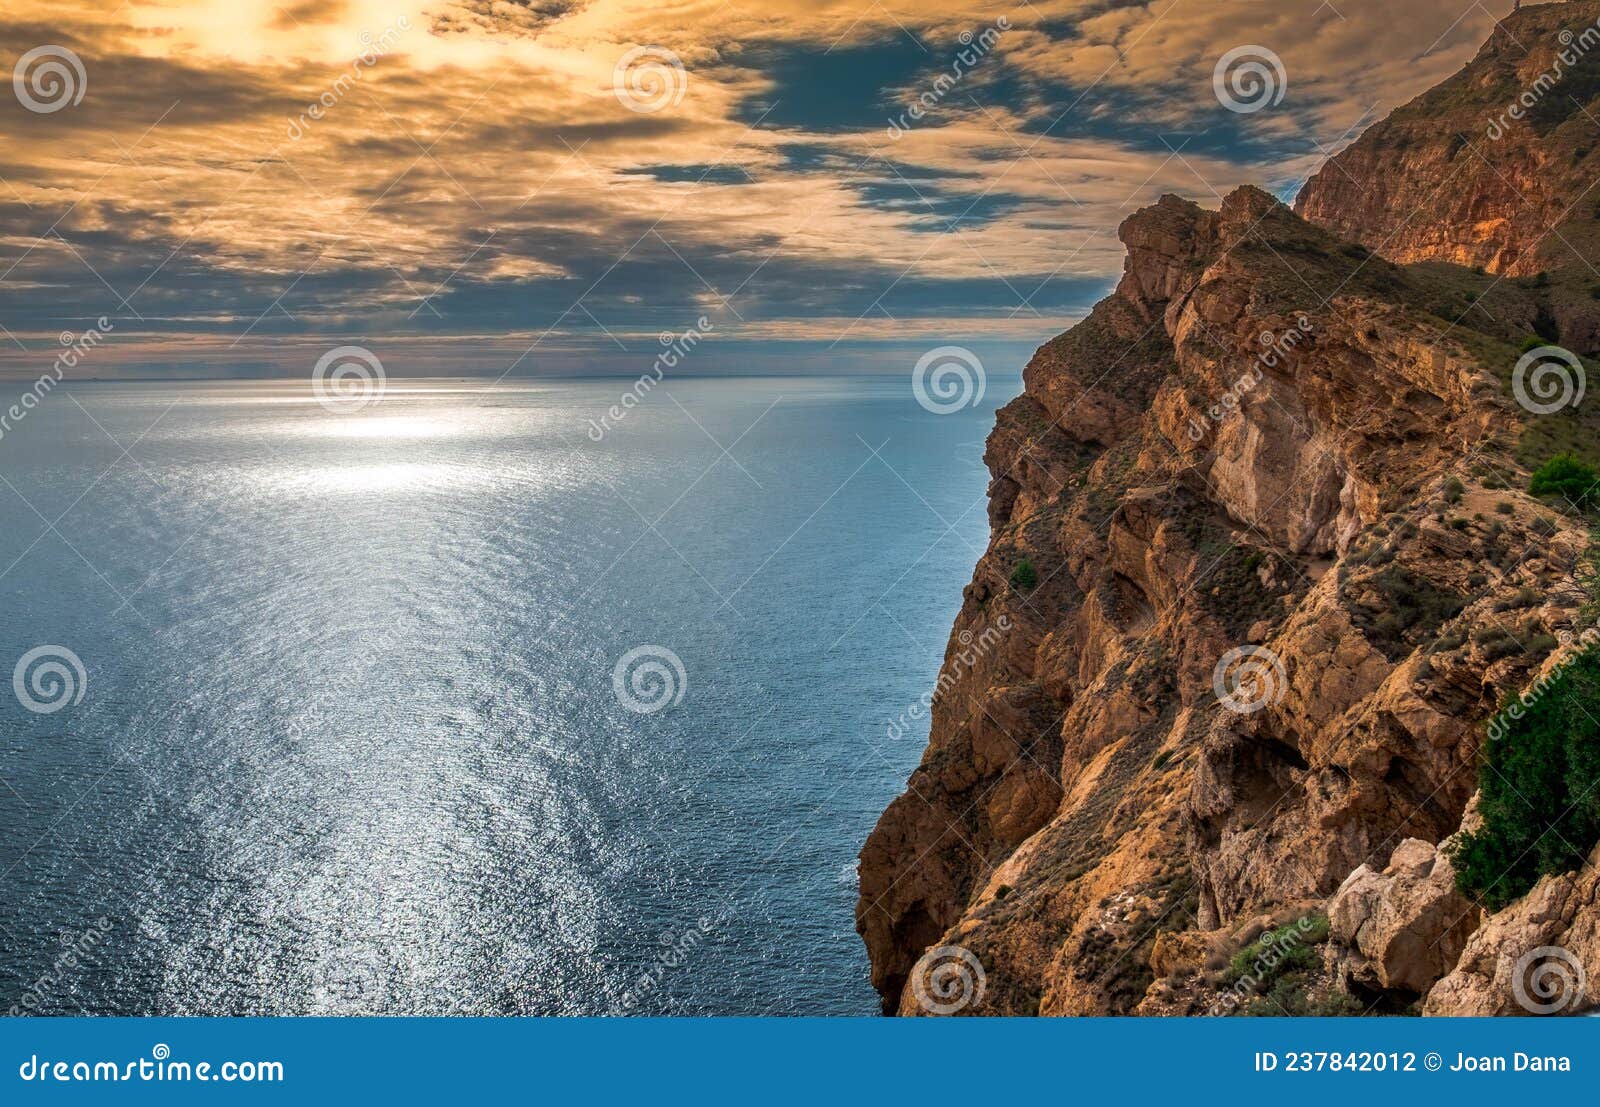 views of the mediterranean sea from the sierra helada near el albir in alicante, spain